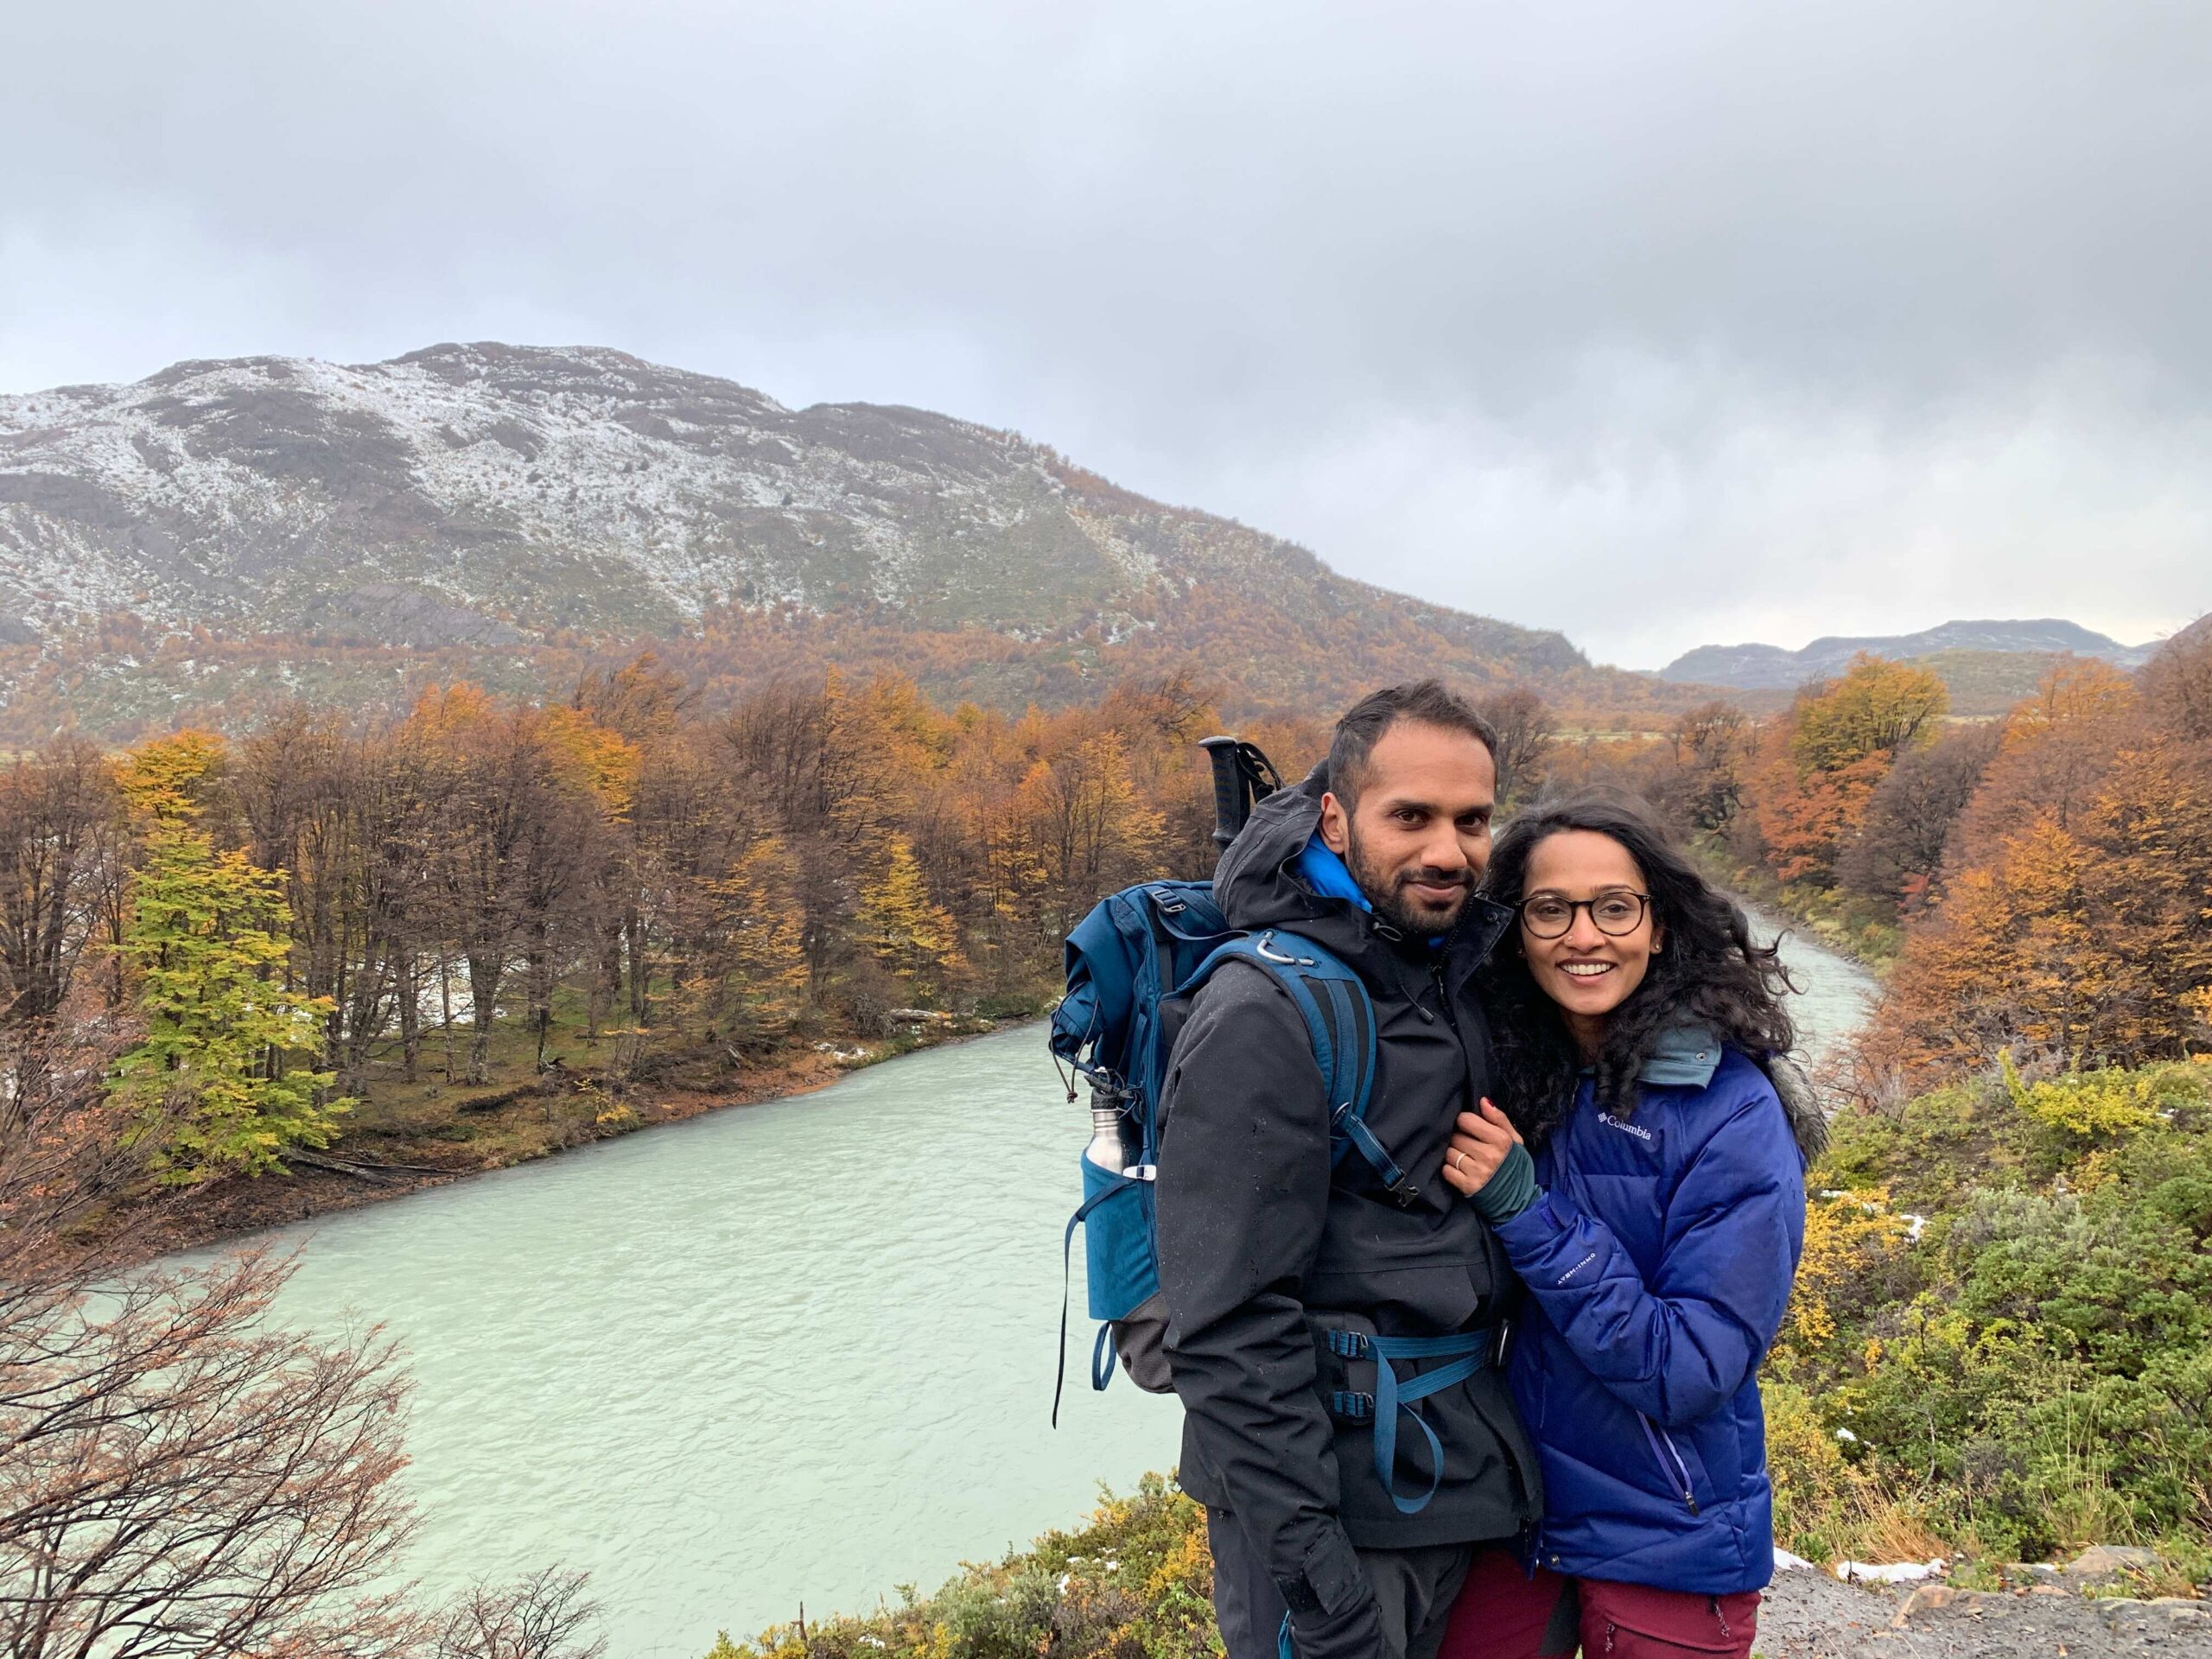 Namisha and Raghunath hiking near a river and mountain